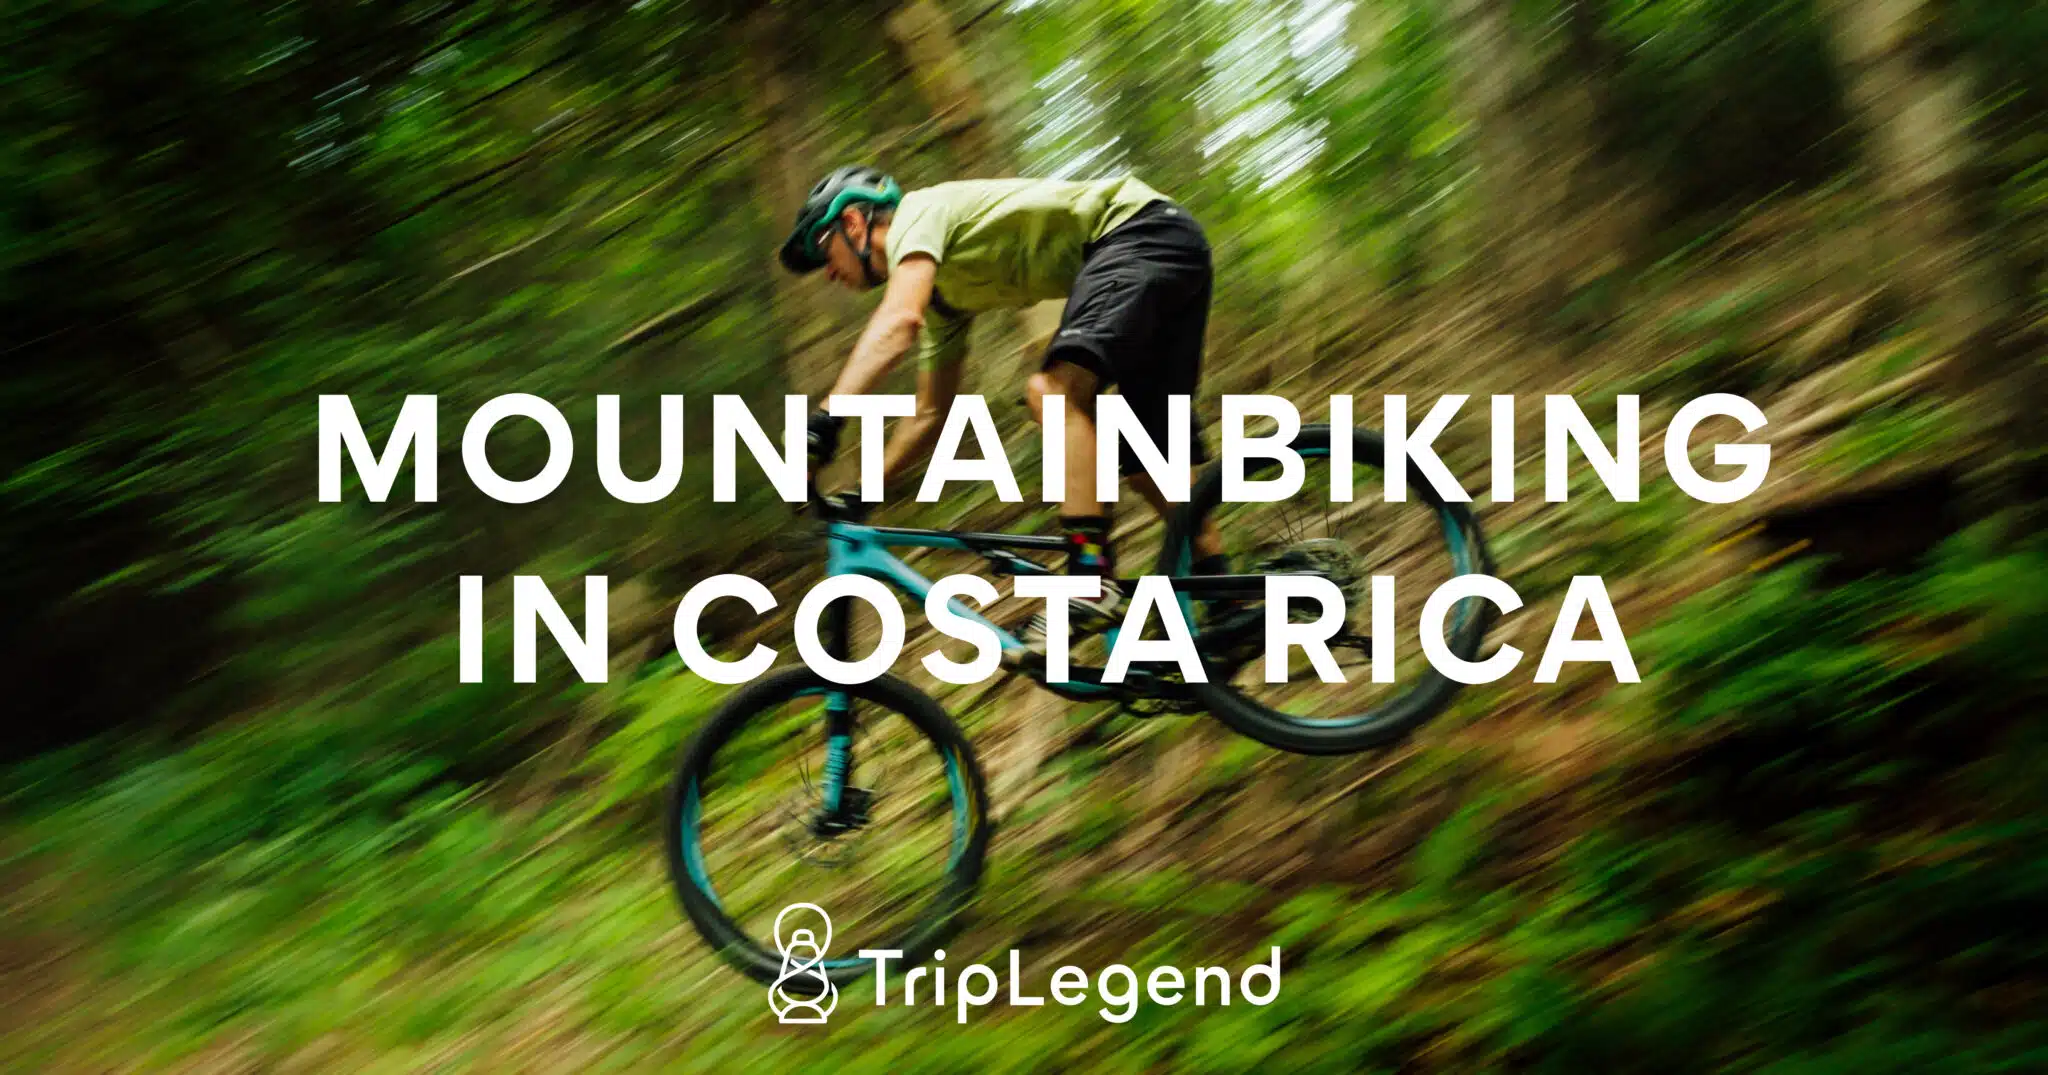 Mountainbiking In Costa Rica 2 Scaled.jpg